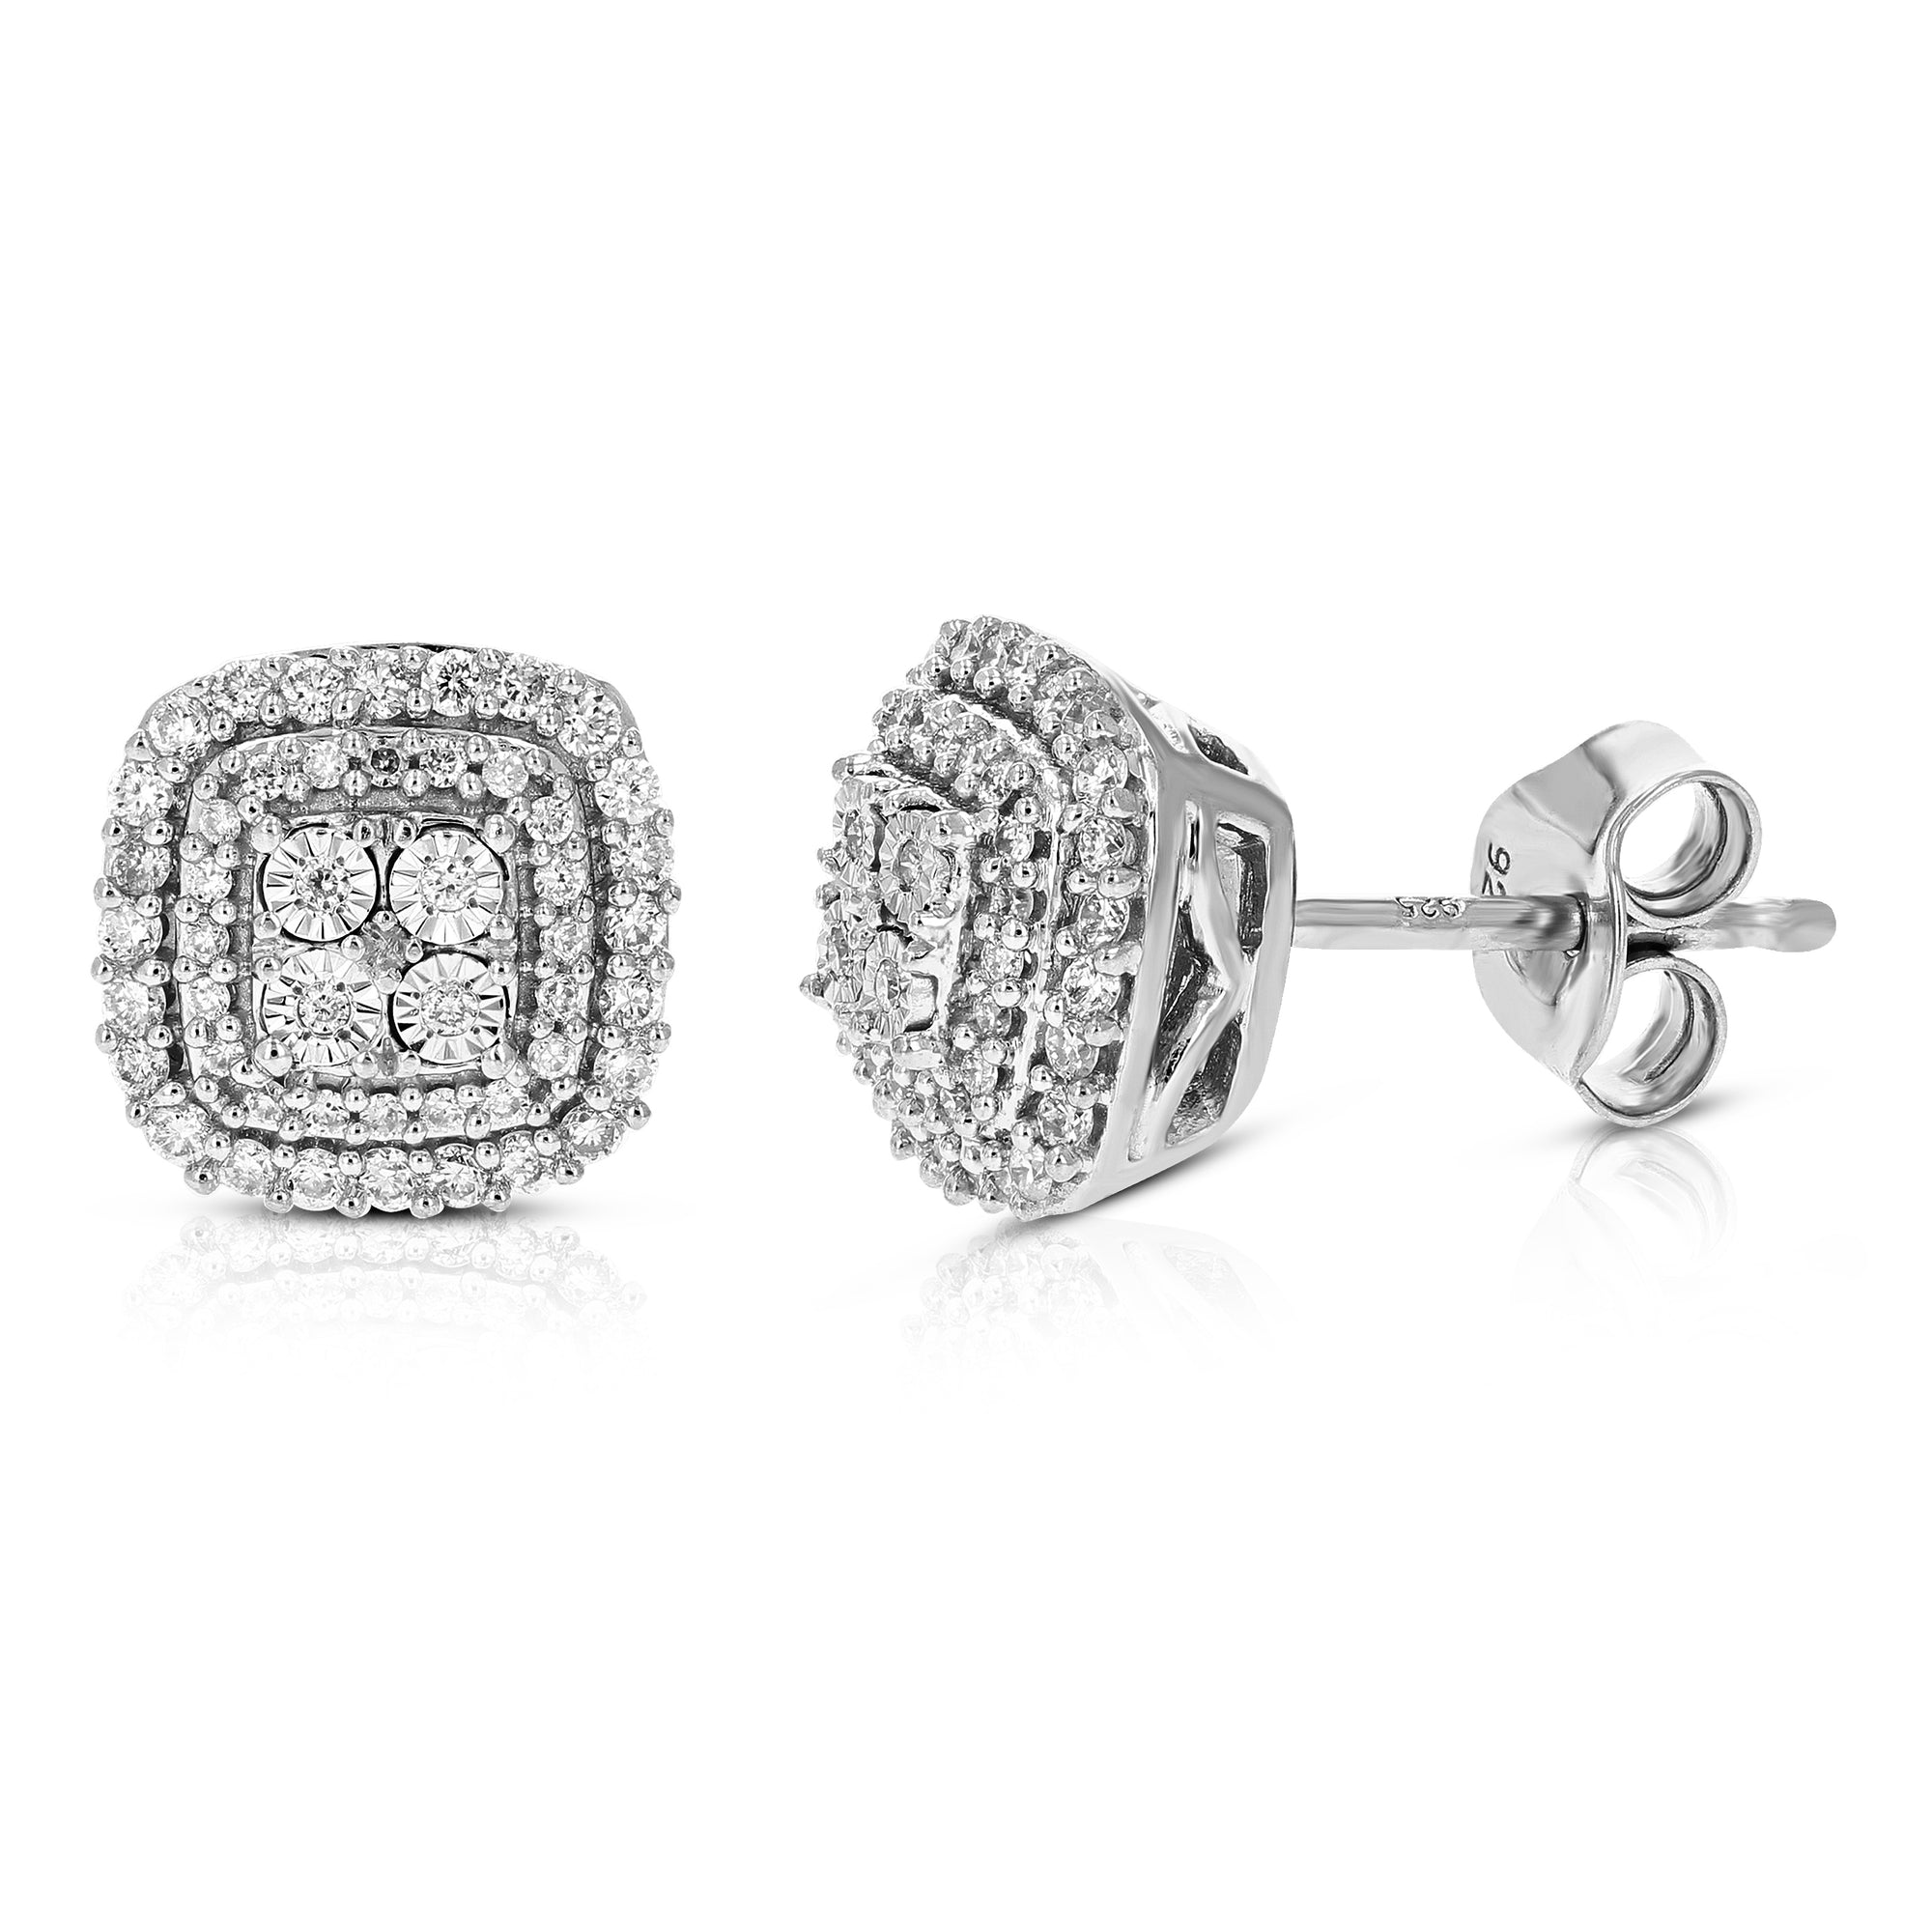 1/10 cttw Diamond Stud Earrings for Women, Round Lab Grown Diamond Earrings in .925 Sterlinng Silver, Prong Setting, 1/3 Inch